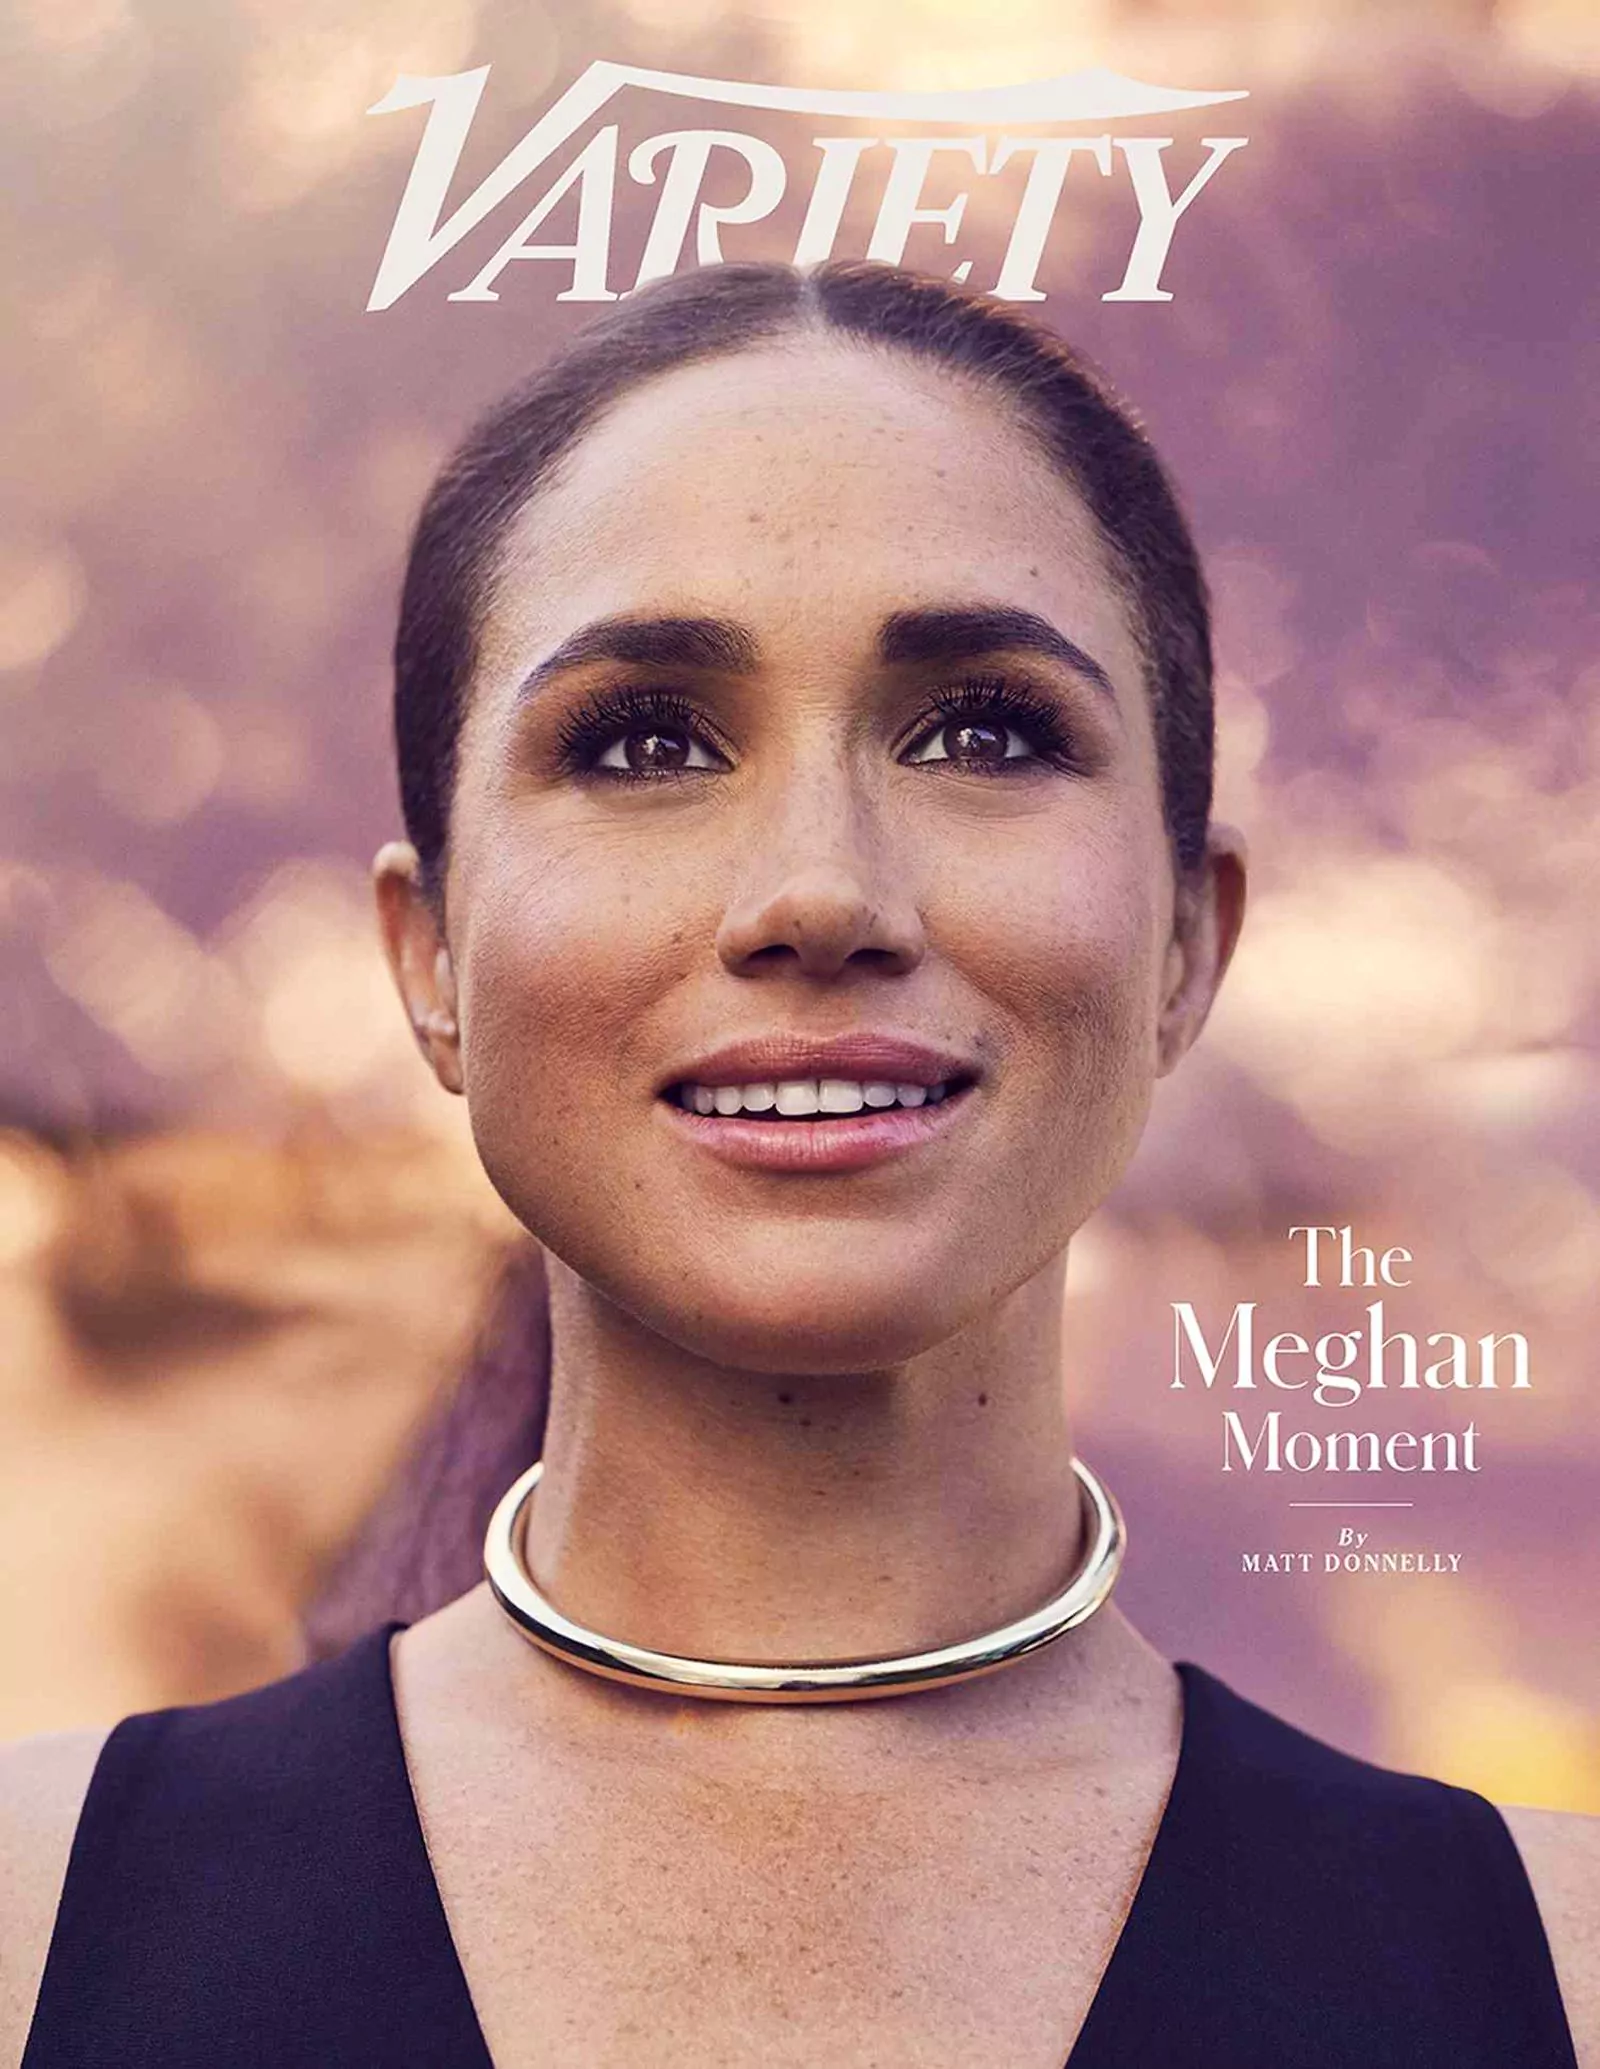 Меган Маркл на обложке журнала Variety